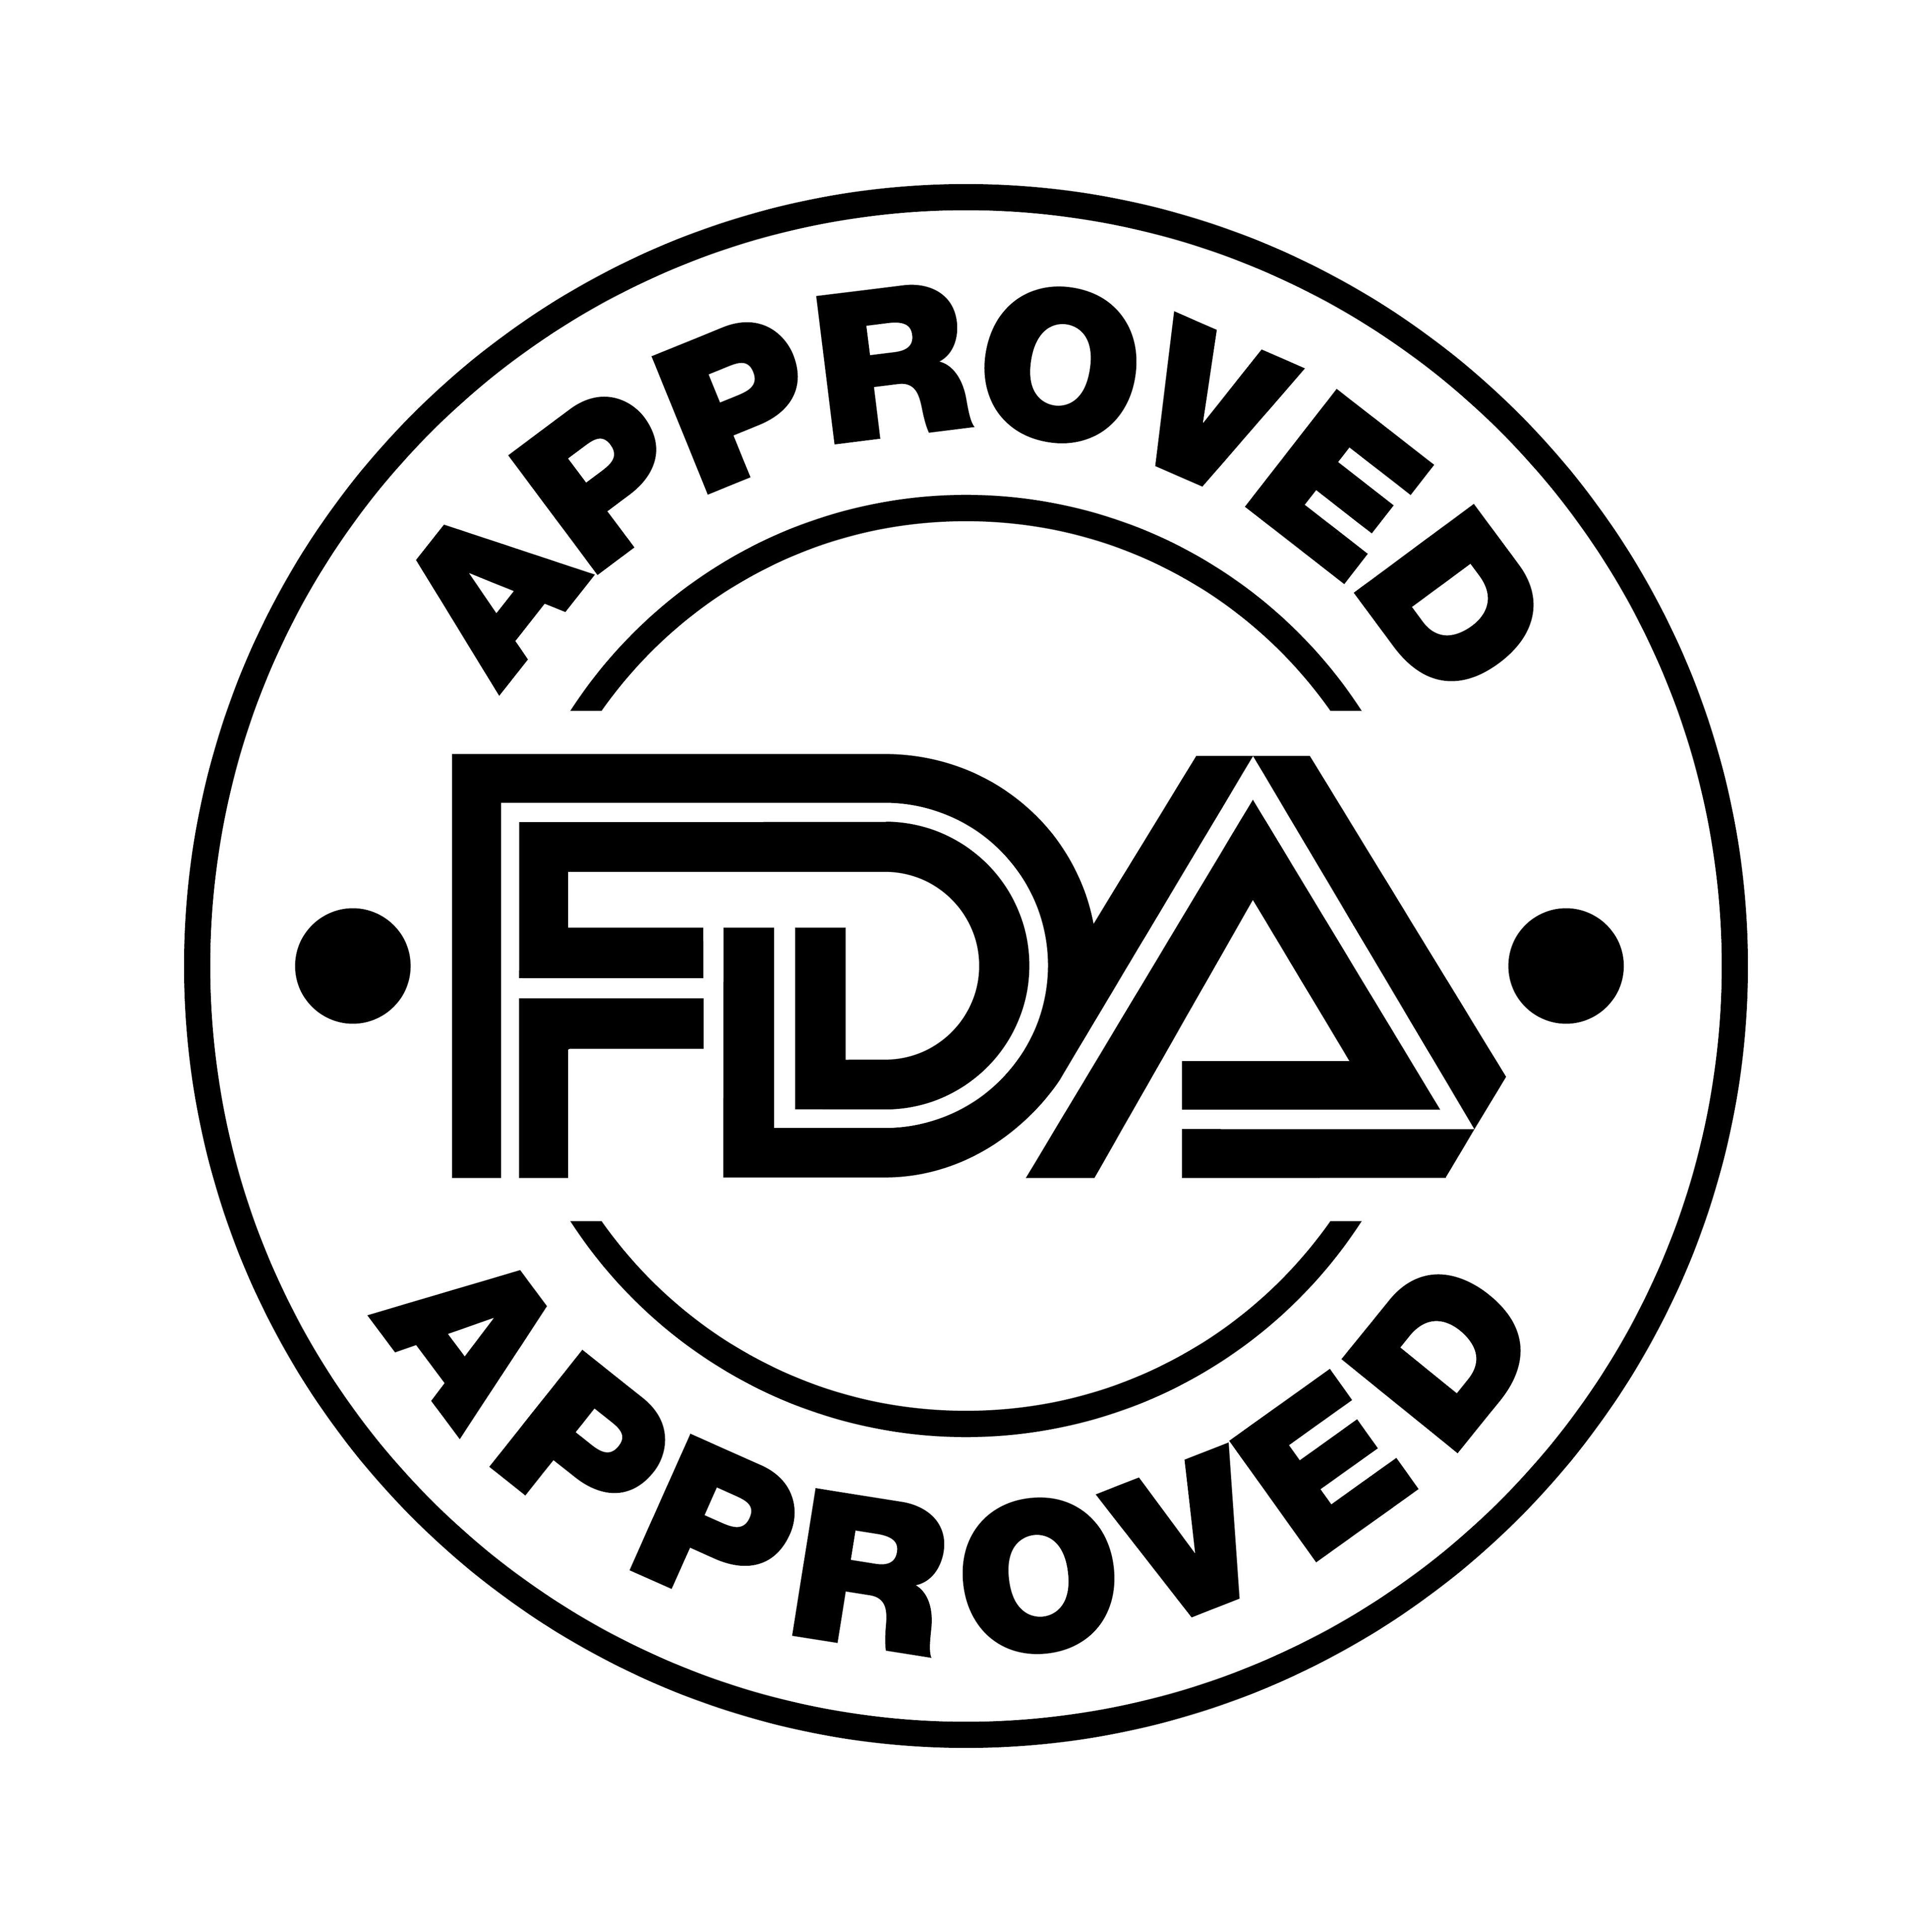 FDA approved stamp logo